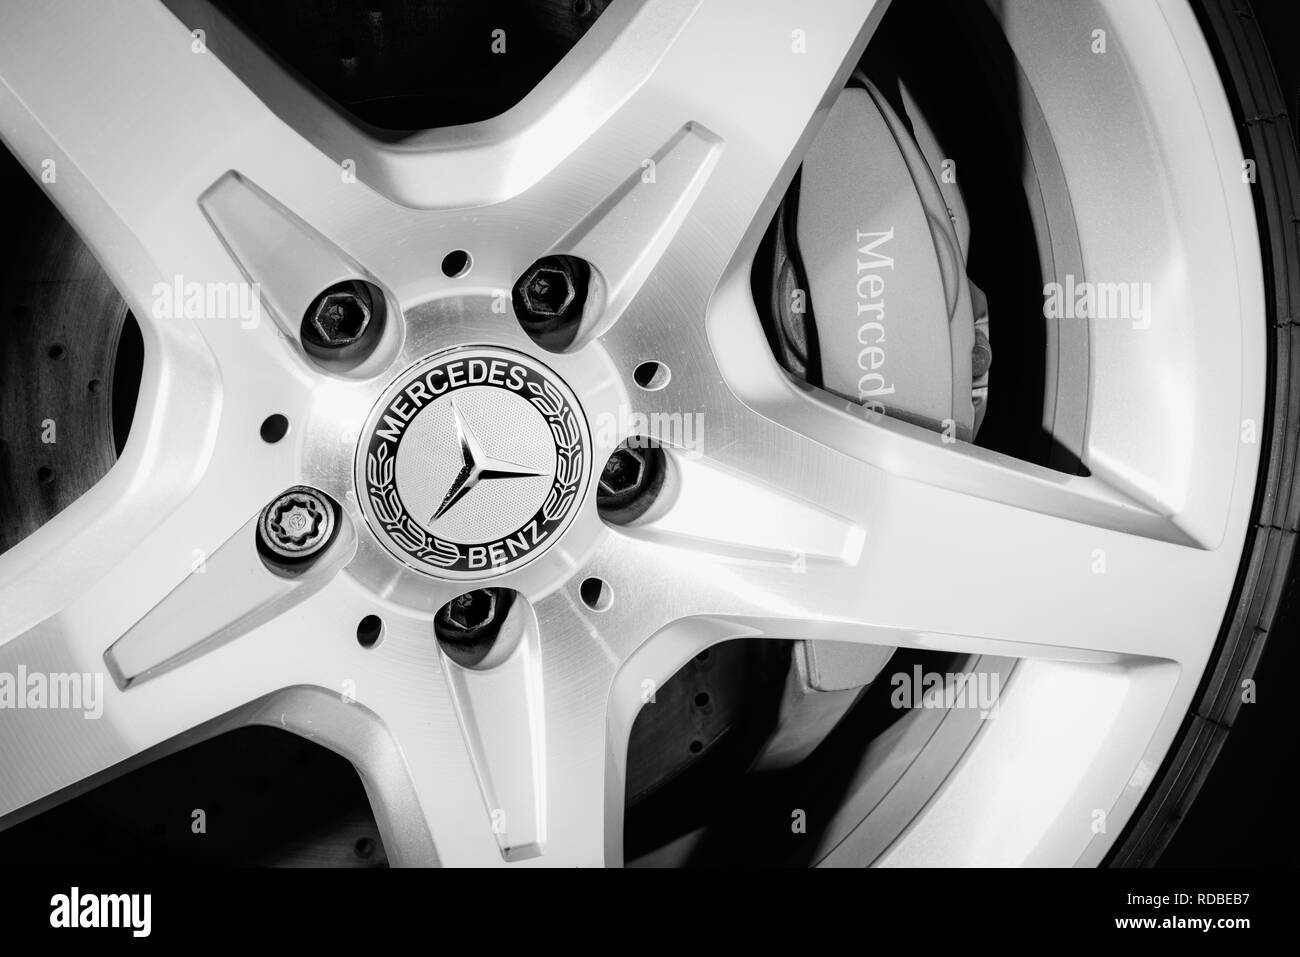 Wheel rim of a Mercedes Benz Stock Photo